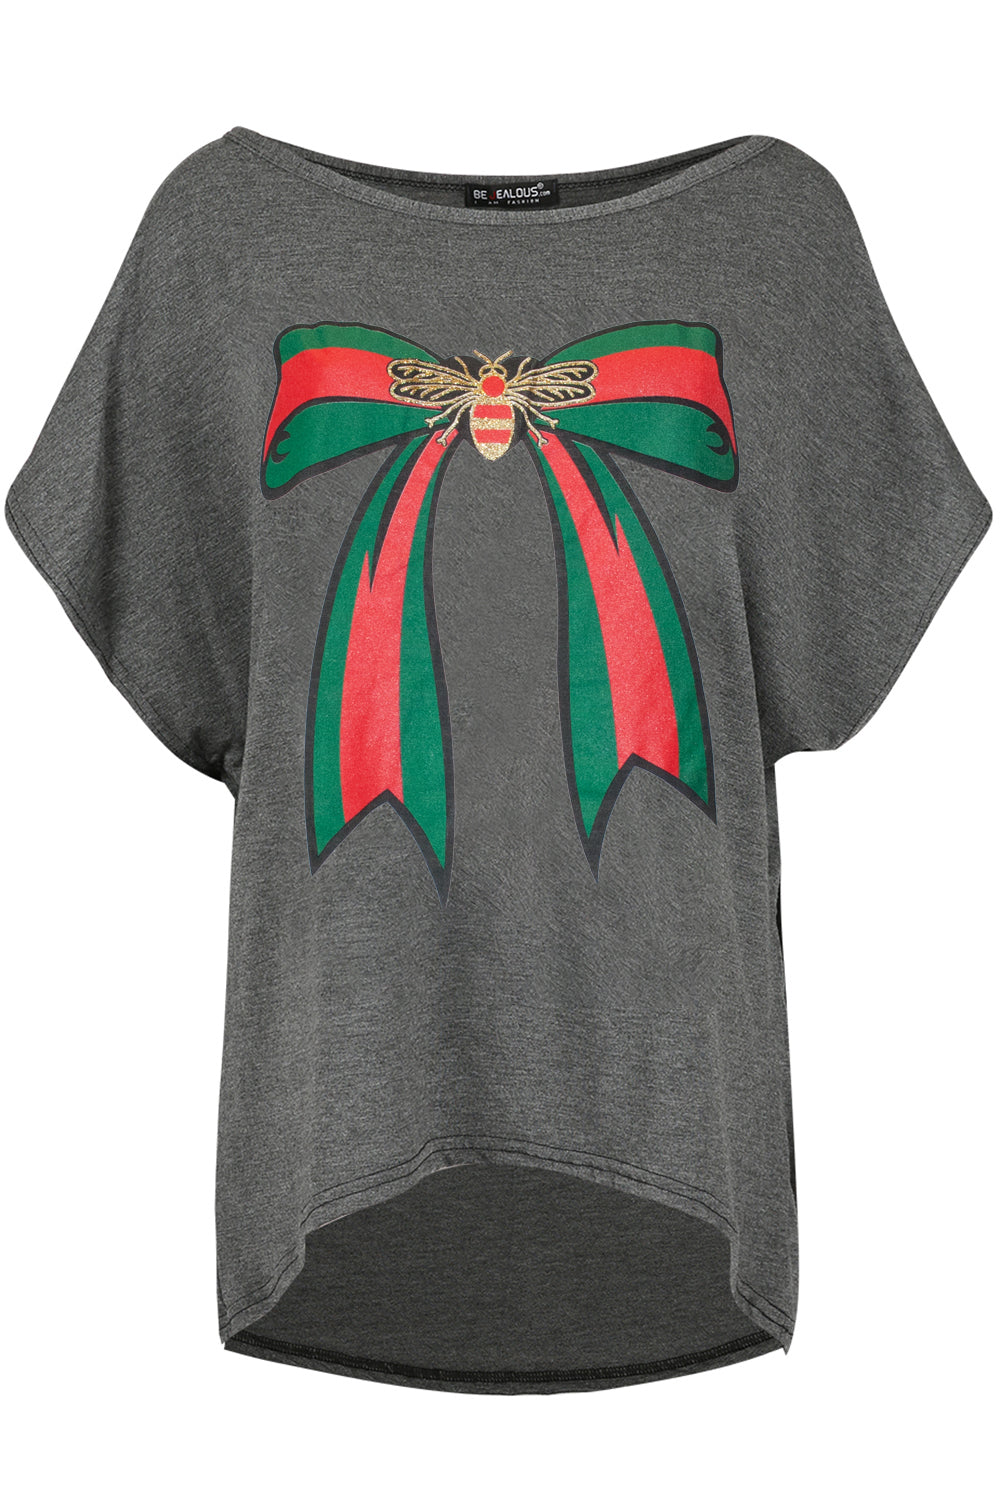 Graphic Print Bow Bat Wing Oversize Black Tshirt - bejealous-com